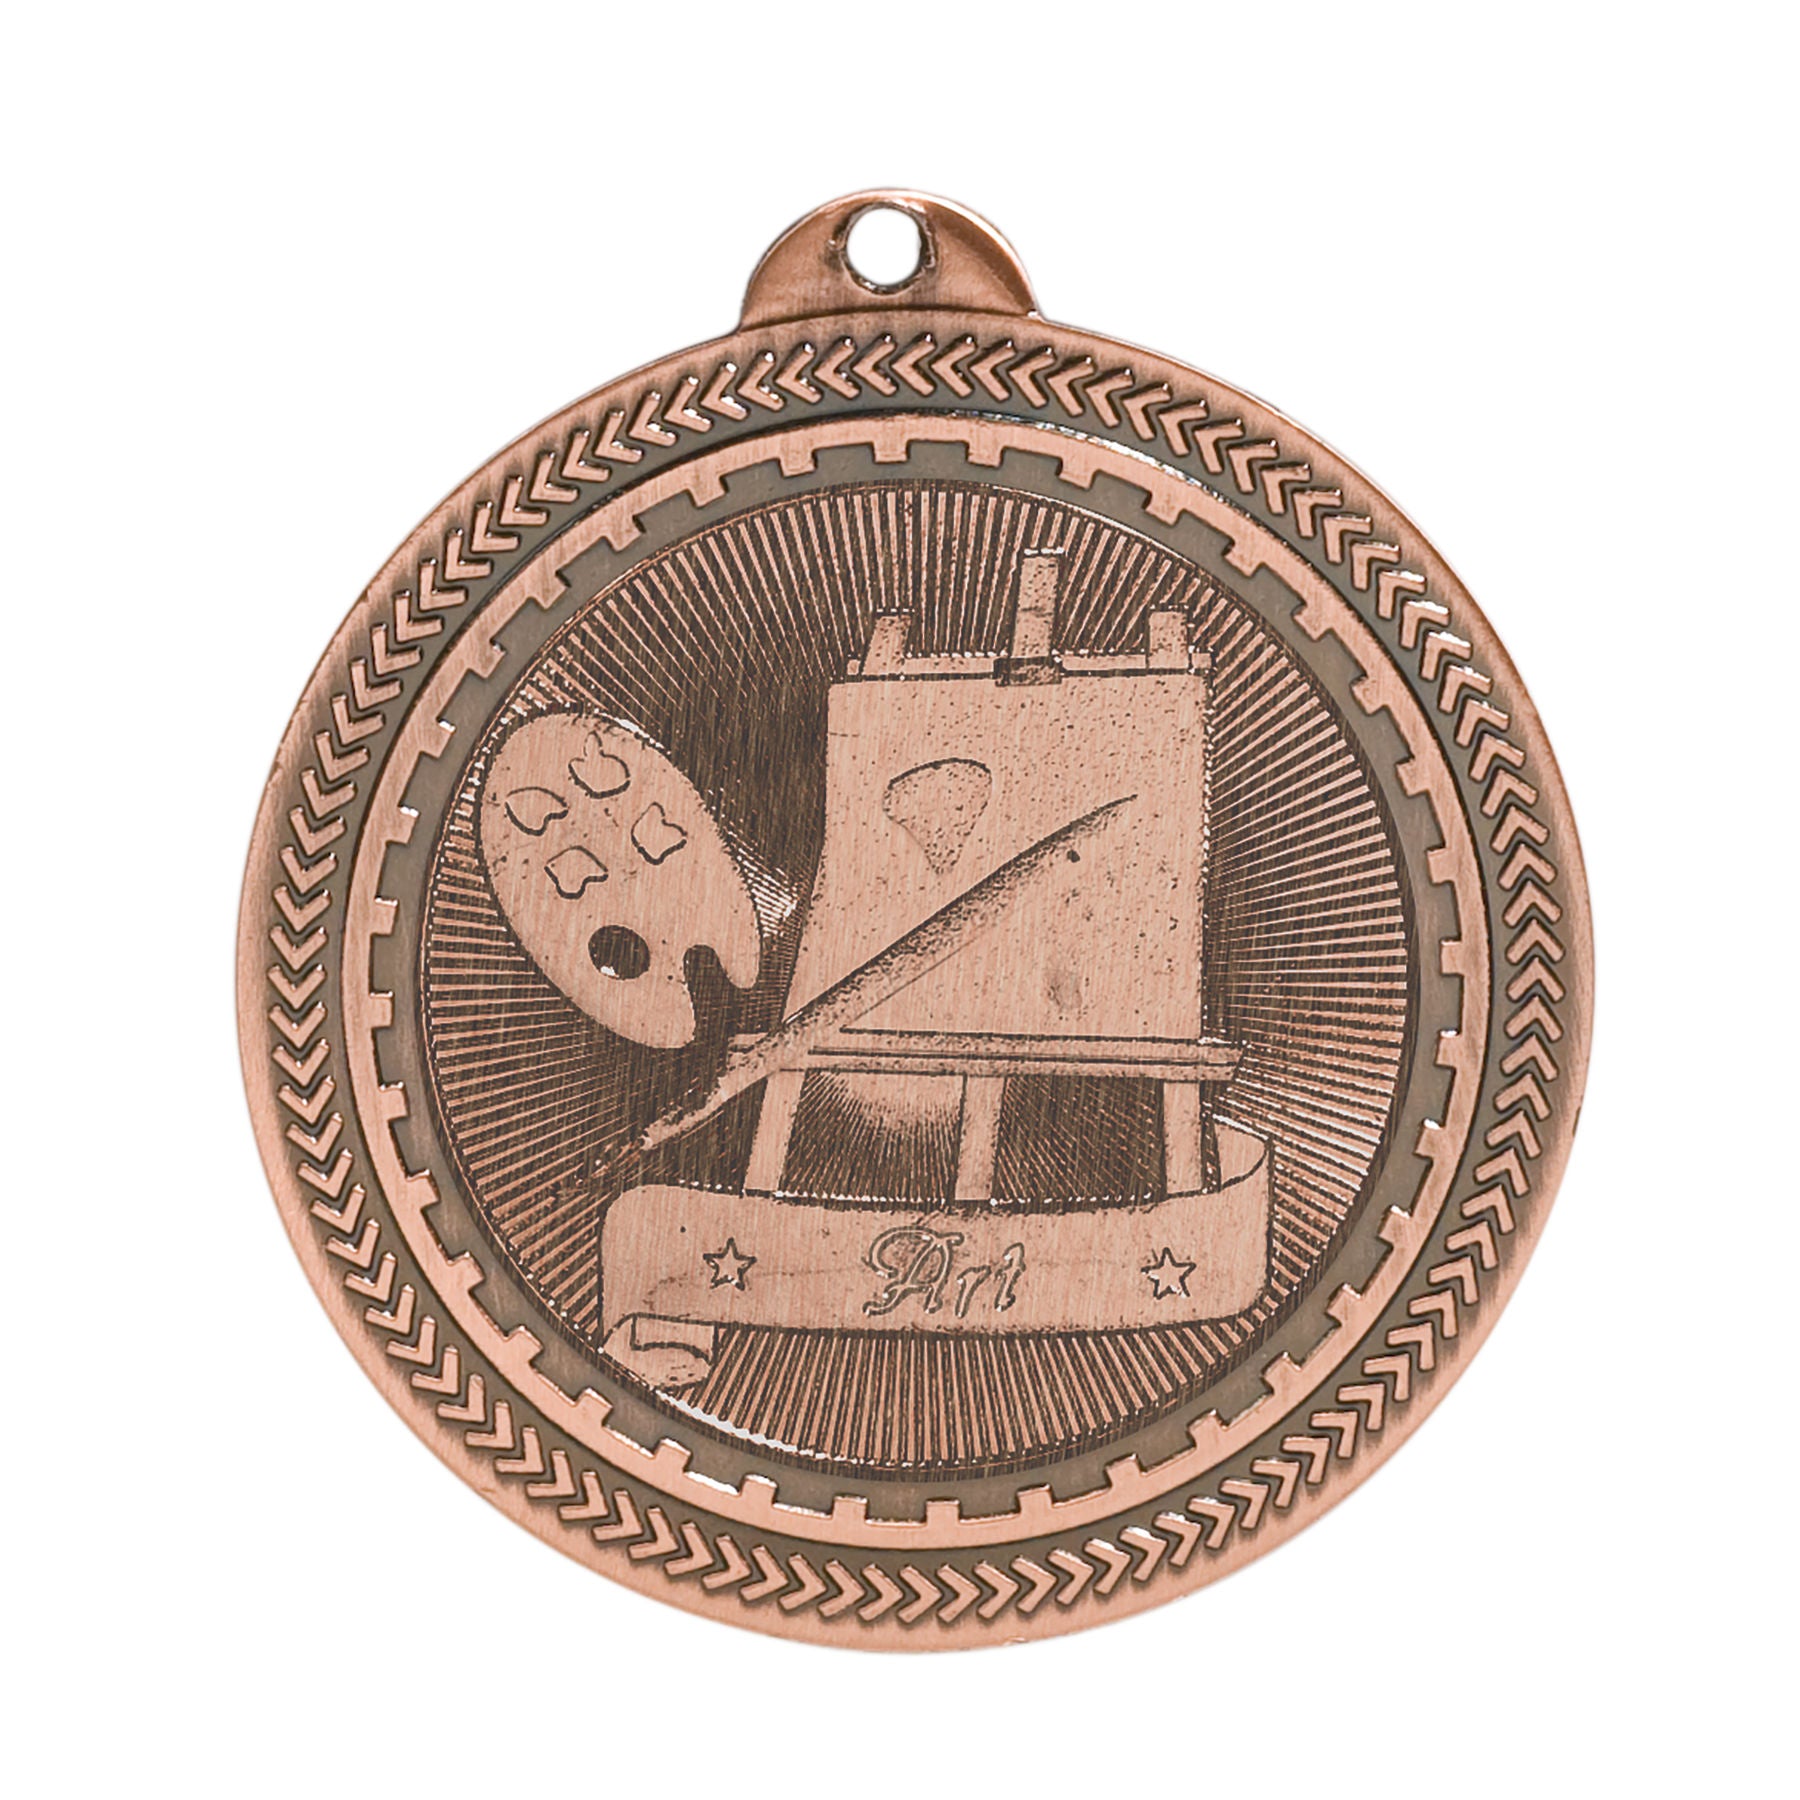 Art Laserable BriteLazer Medal, 2" - Craftworks NW, LLC